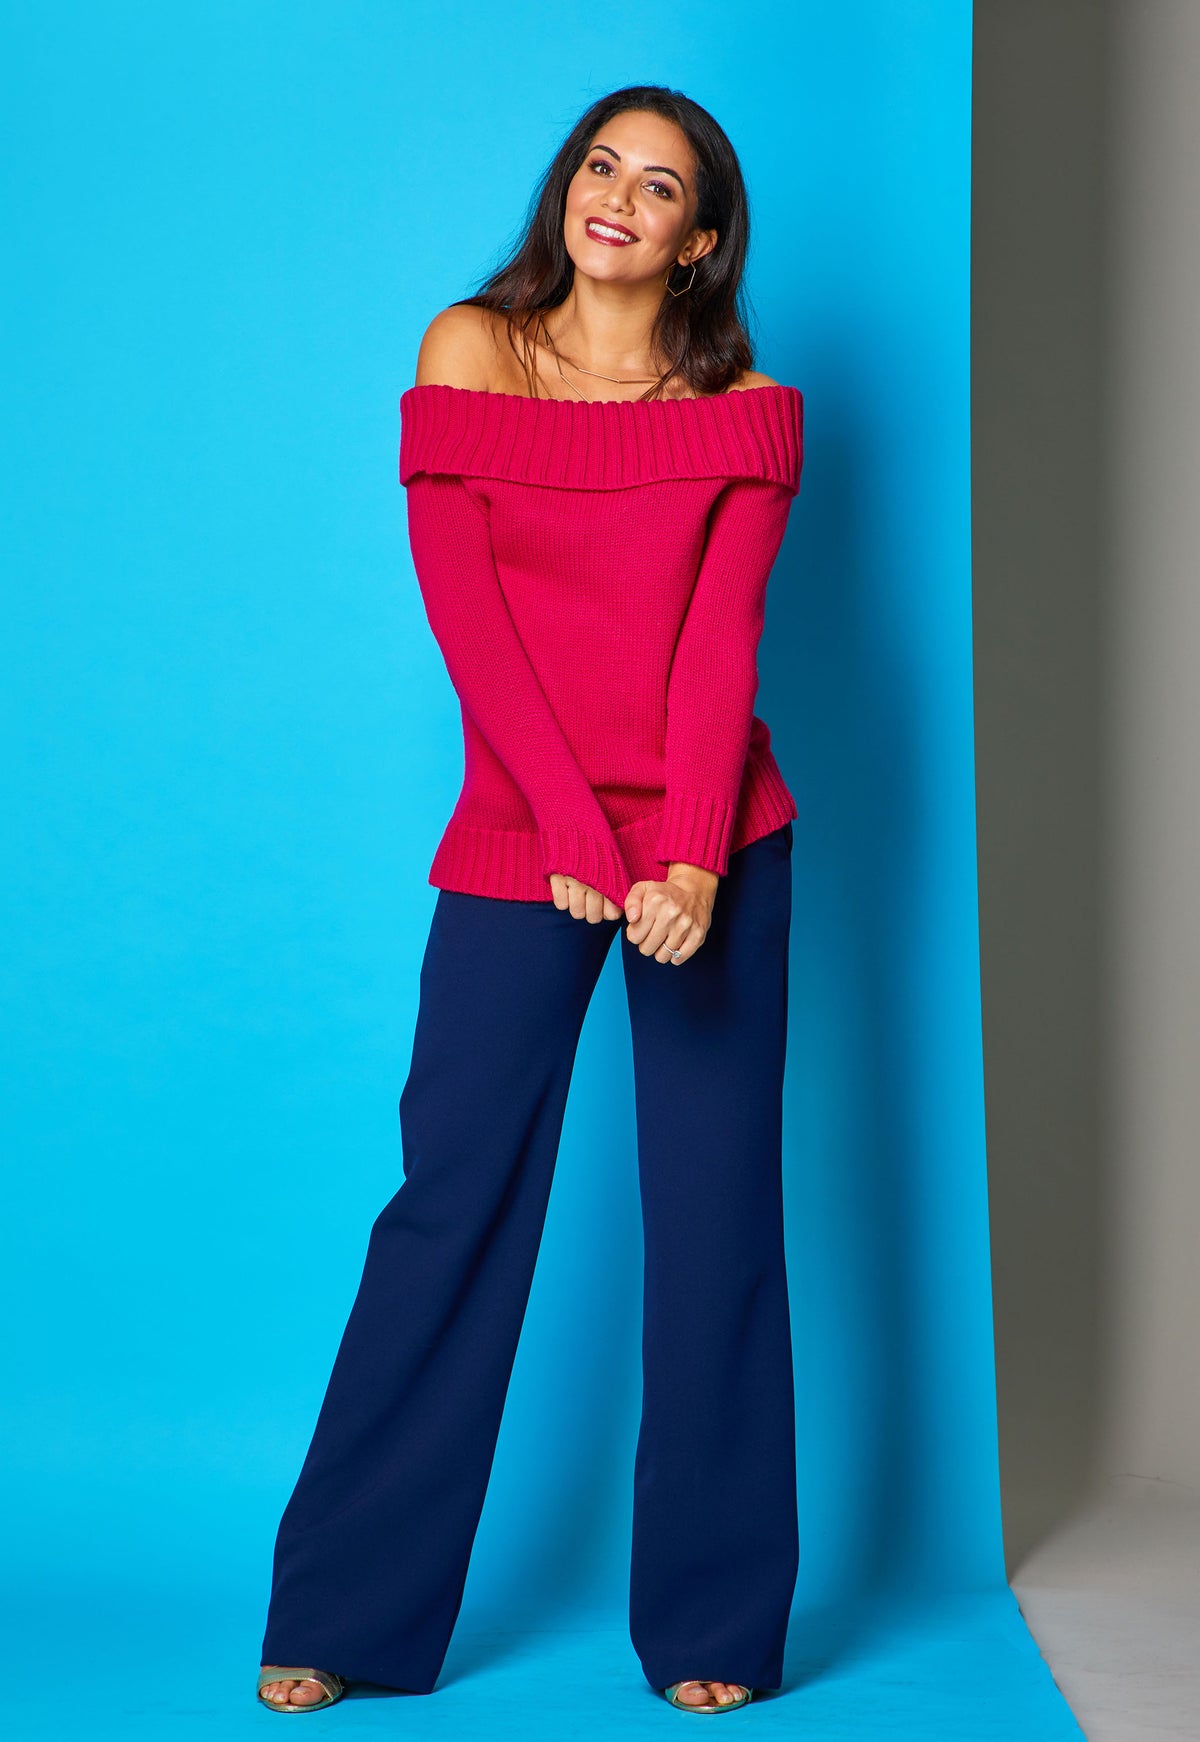 Alta Merino Wool Blend Jumper Bright Pink, Sample, Size Small/Medium